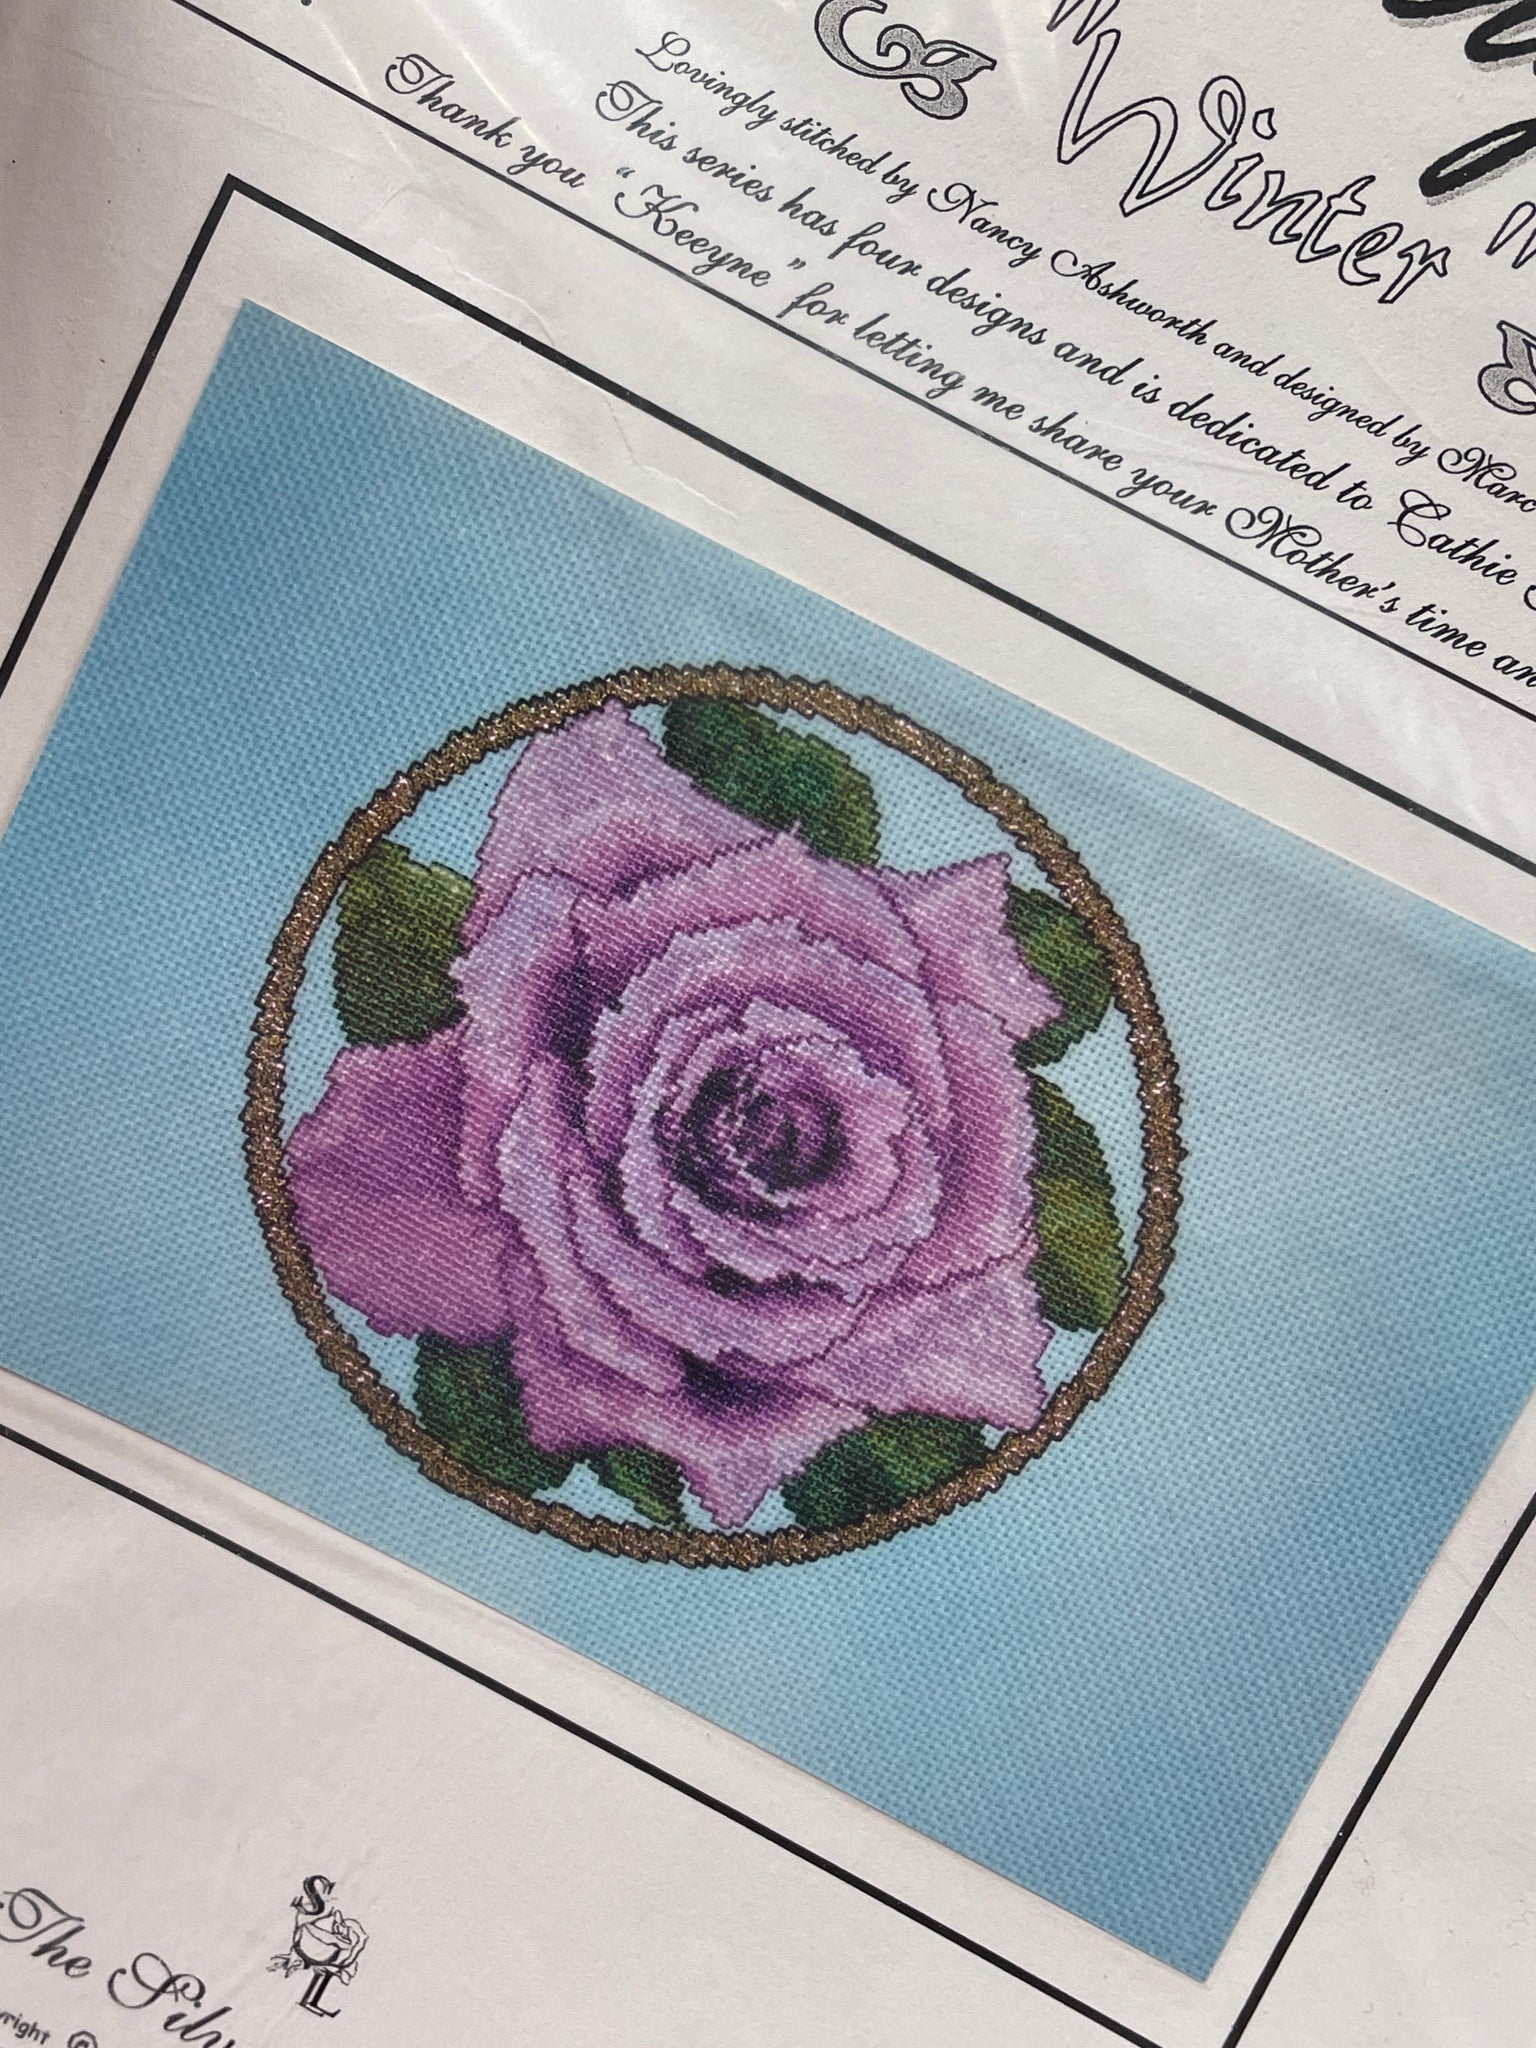 2005 Cross Stitch Pattern - Purple Rose "A Rose for Every Season"